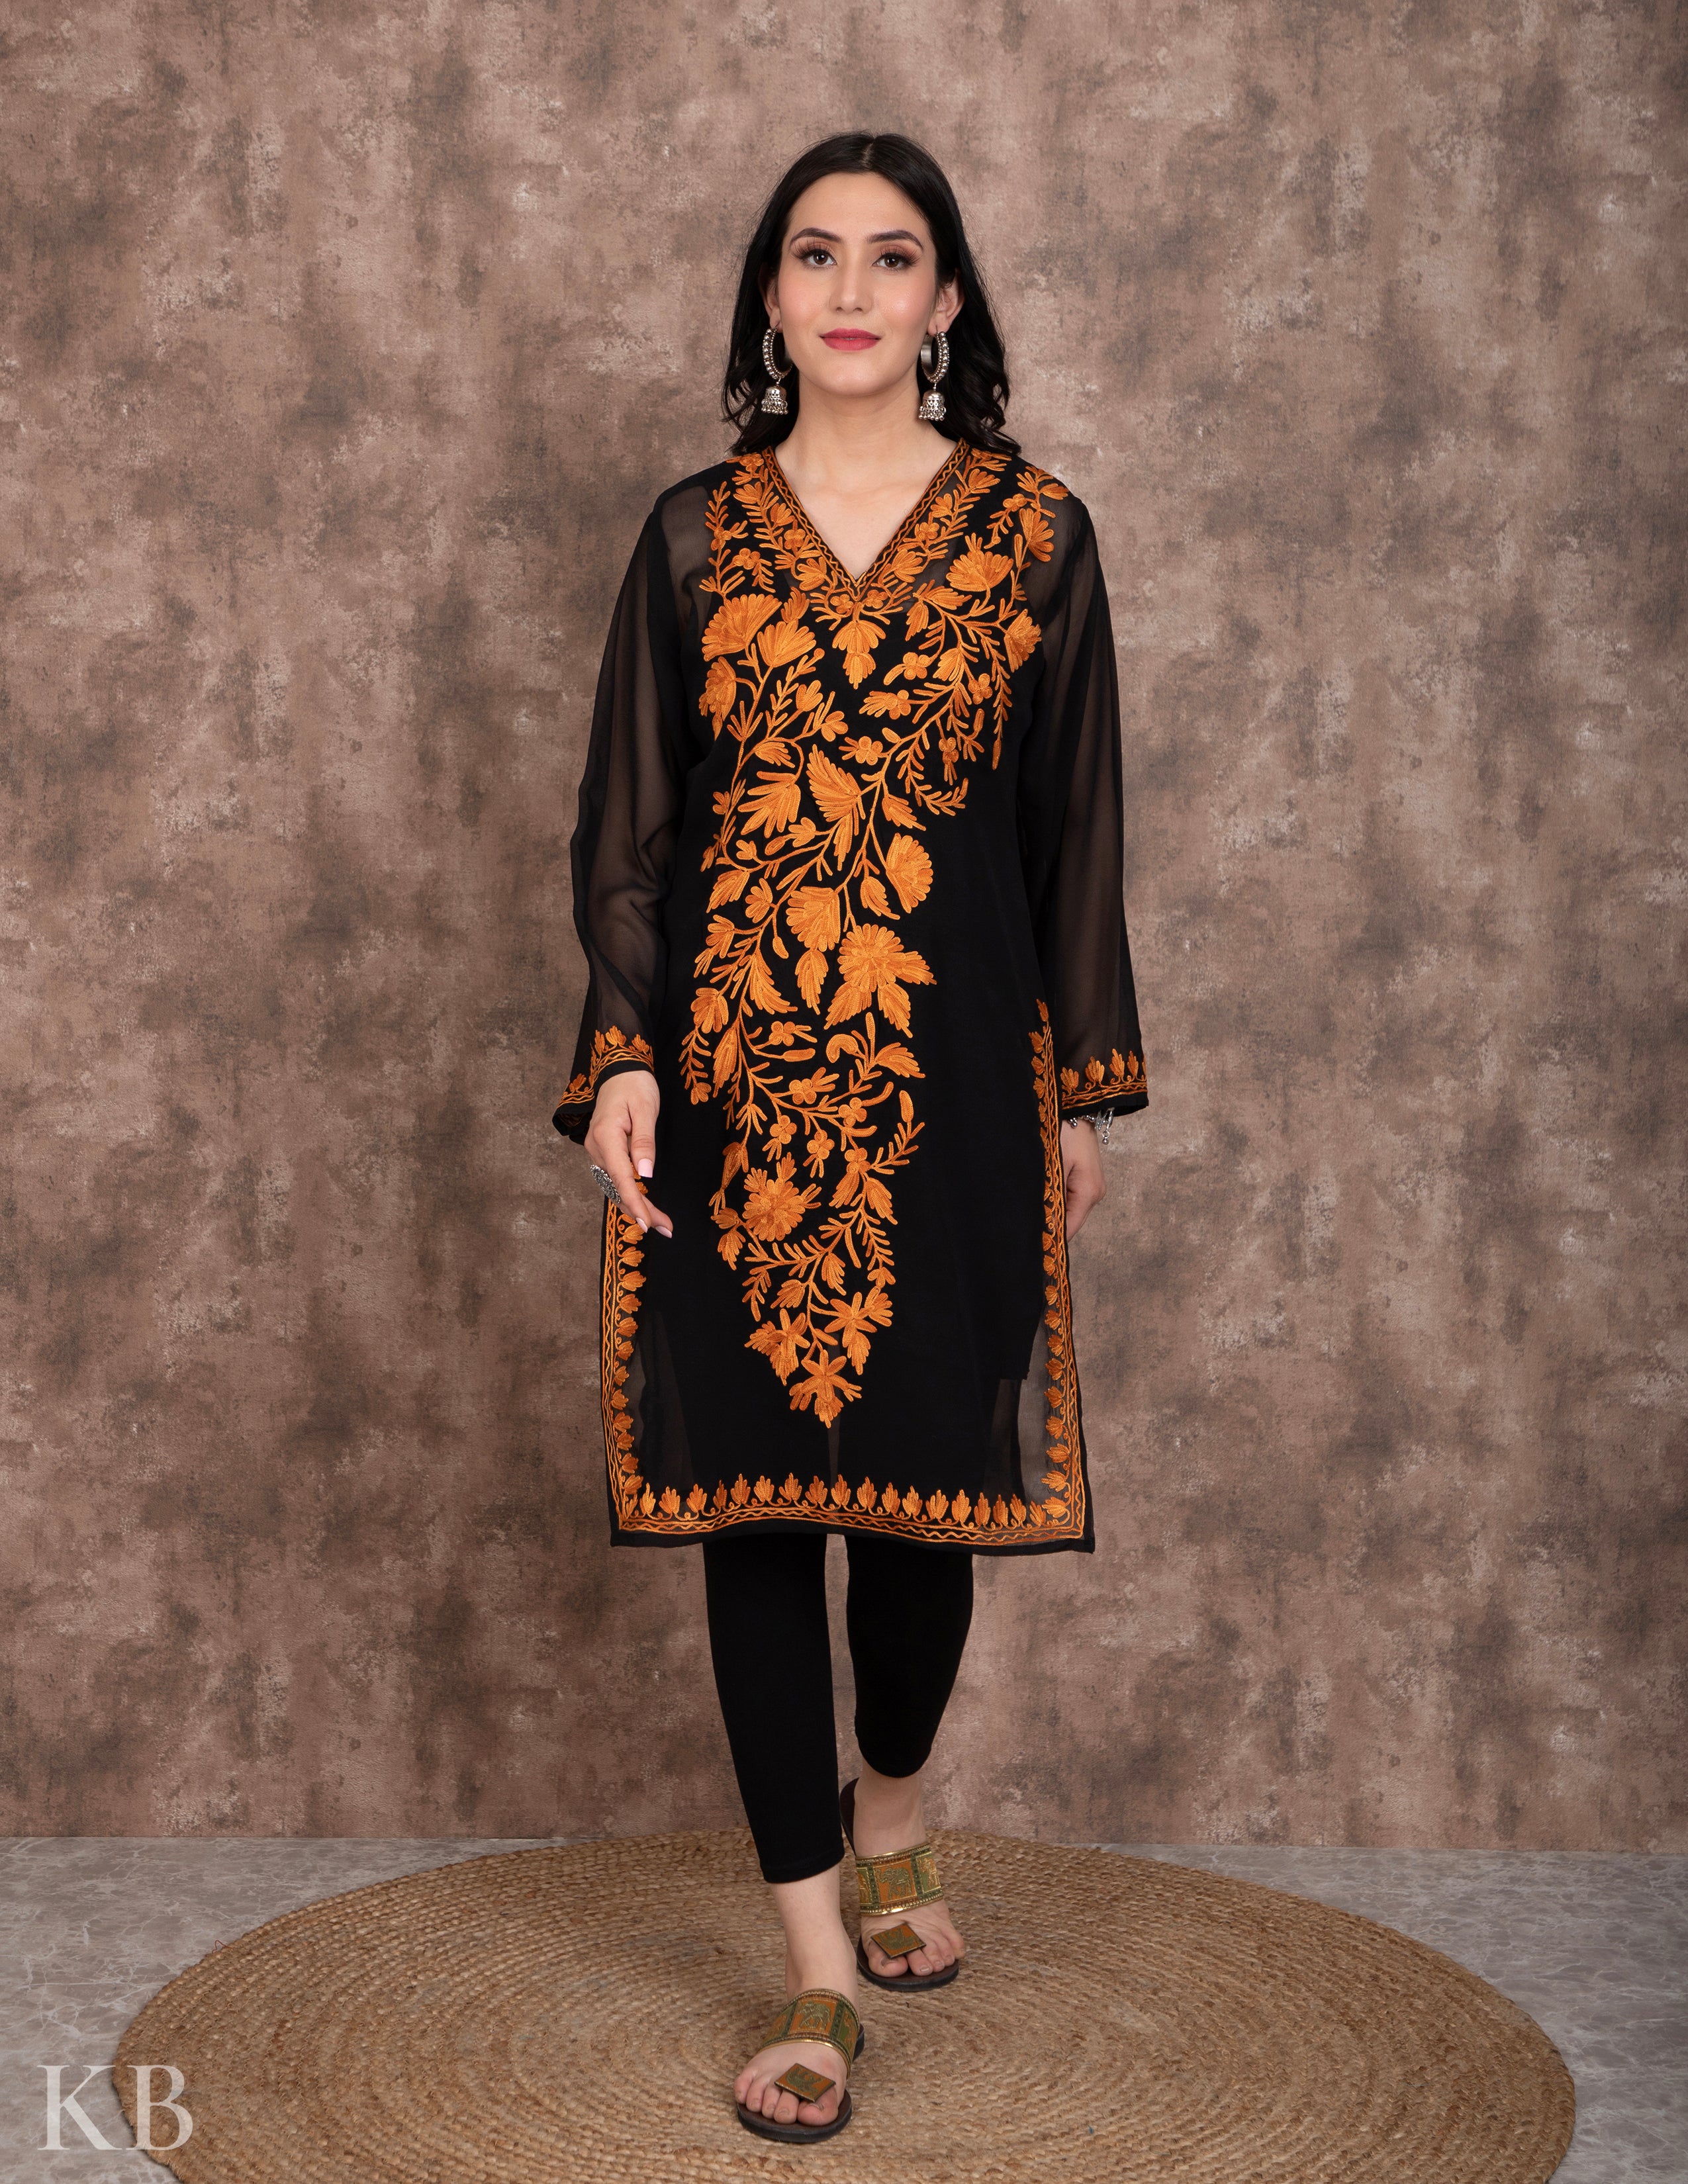 kashmiri Kurti Design|Kashmiri Dress Design|Latest Kashmiri Fashion|Kurti  Design|Beautiful You - YouTube